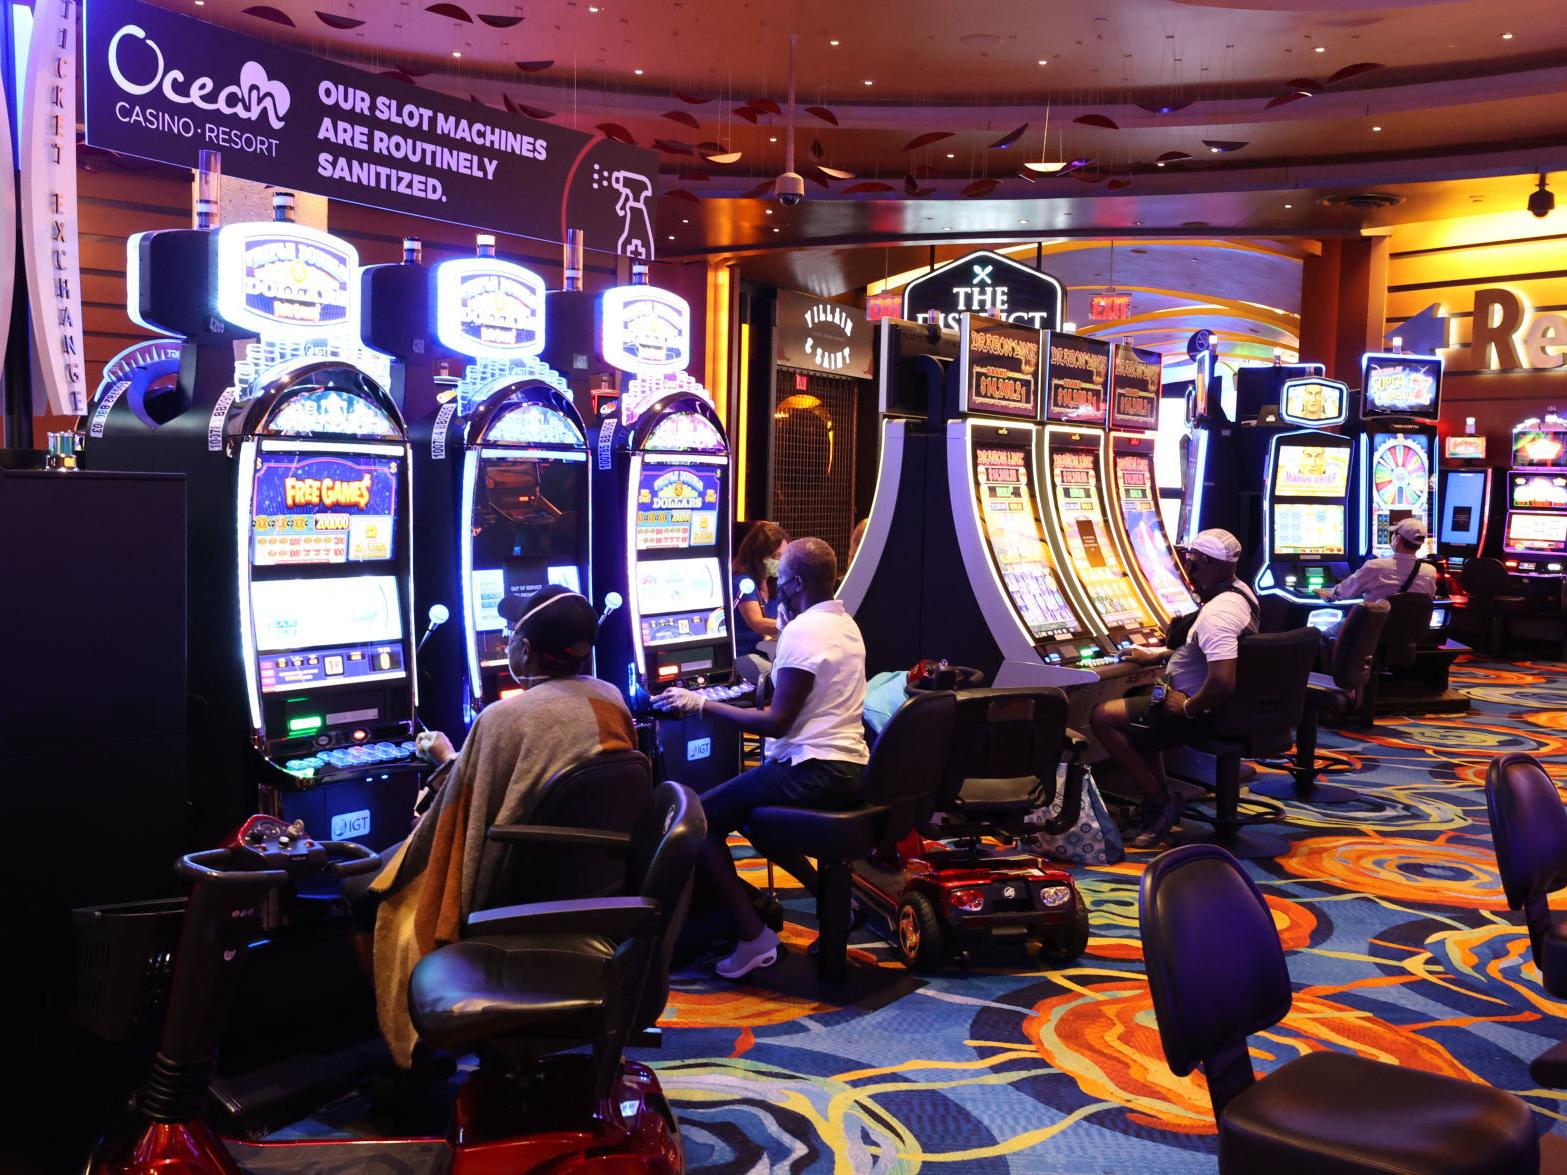 Casino Revenue of Massachusetts Tumbles Over Holidays